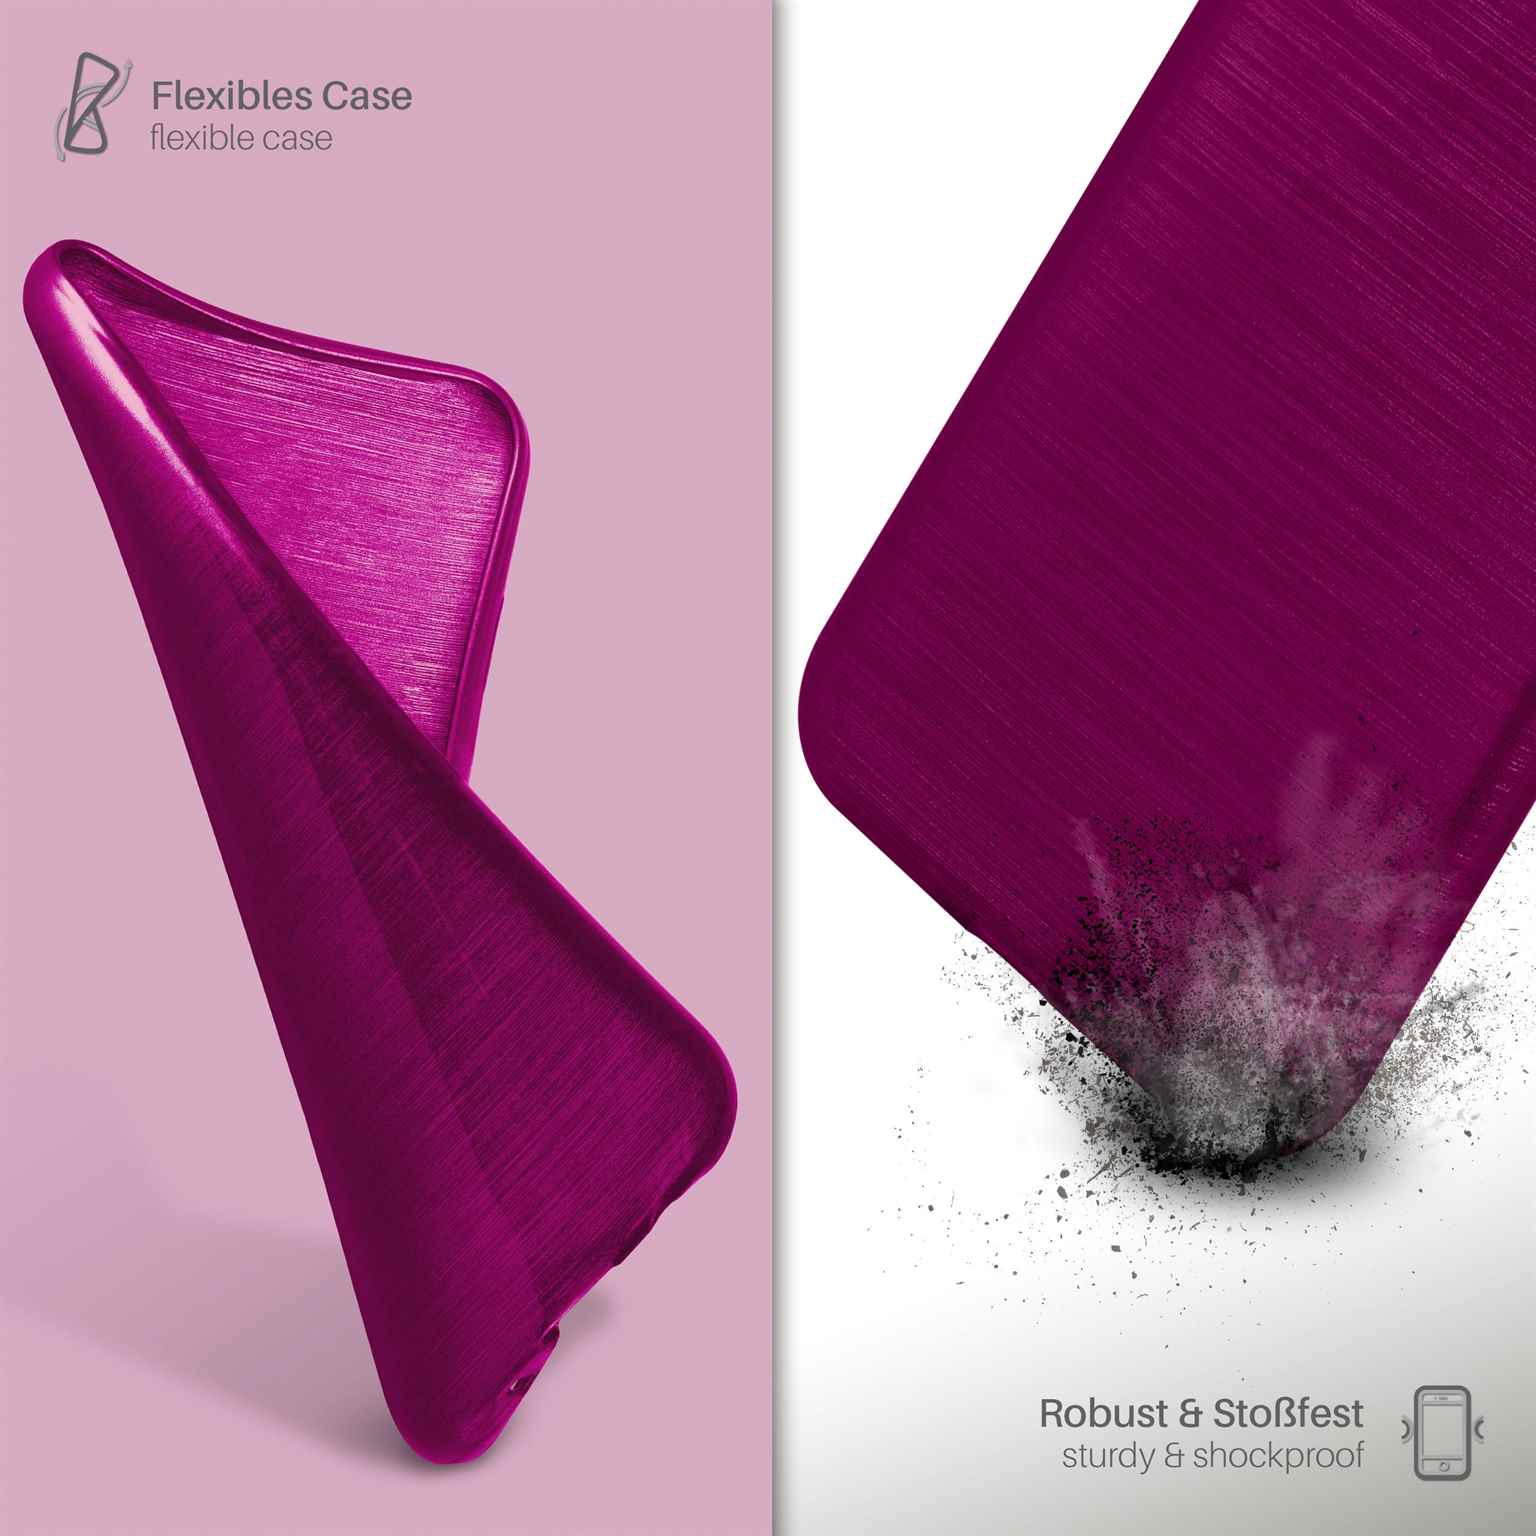 MOEX Brushed Case, 5c, Backcover, Purpure-Purple Apple, iPhone